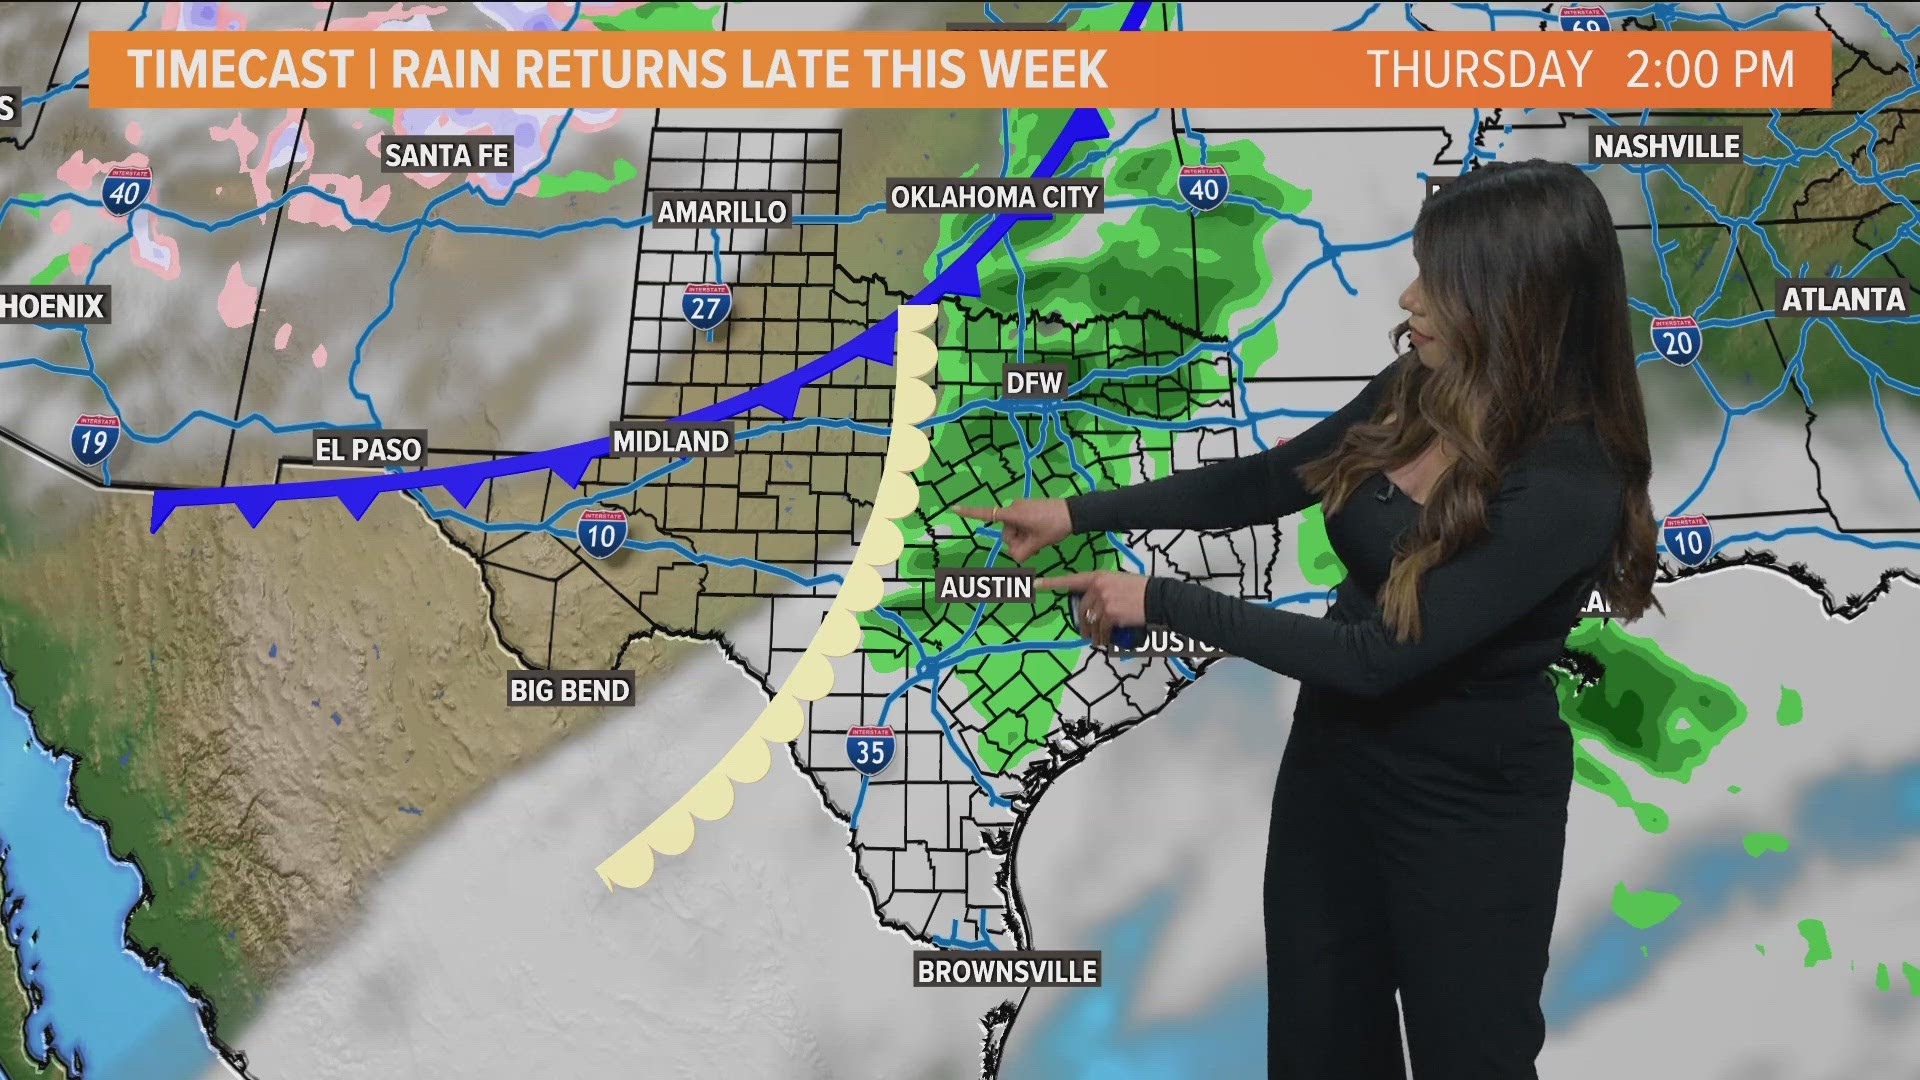 DFW Weather: Slight rain chances starts sunny Monday; severe storms ahead